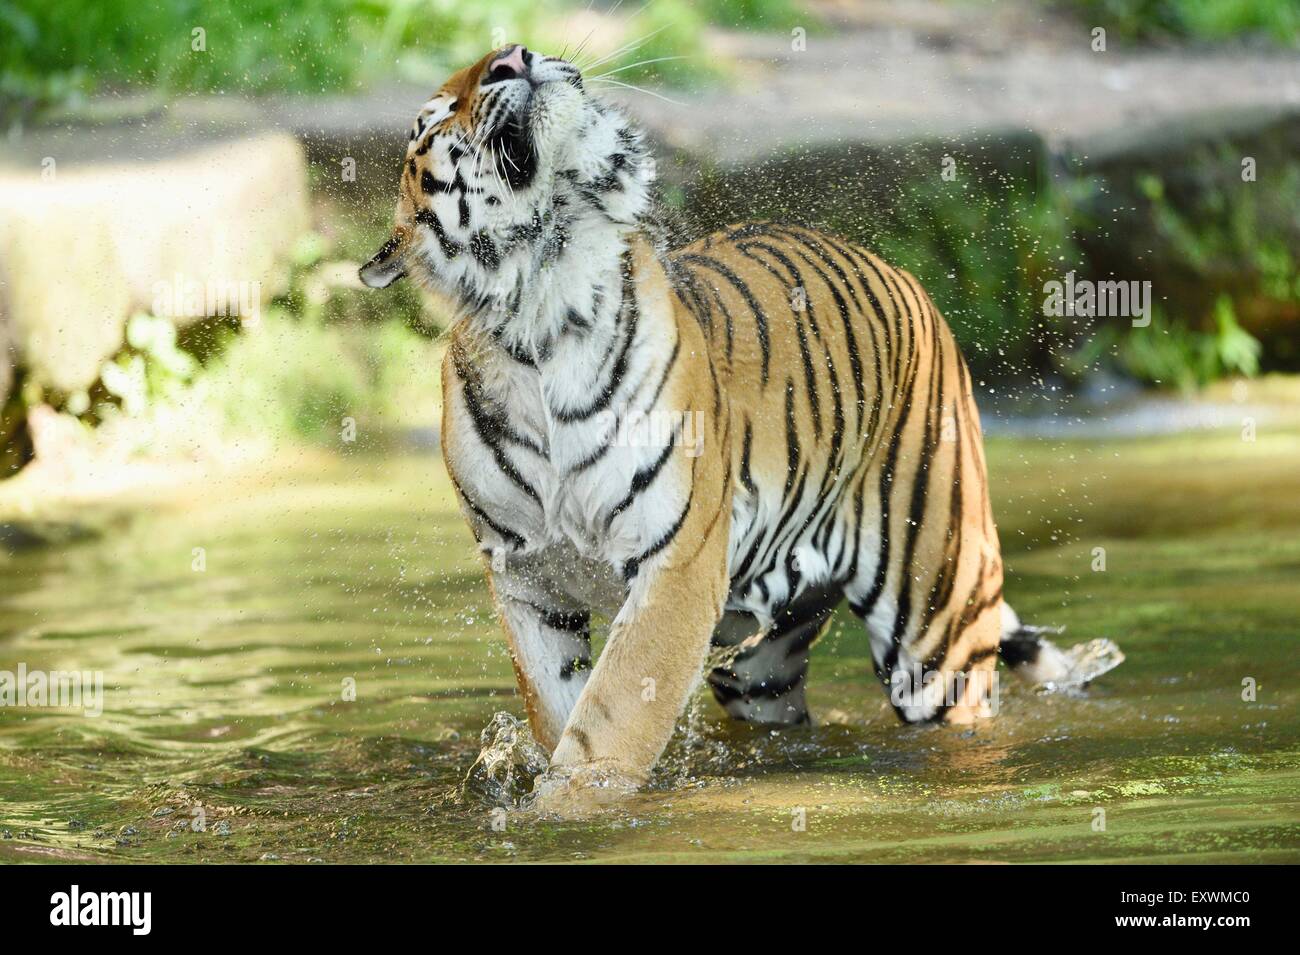 Siberian tiger in water Stock Photo